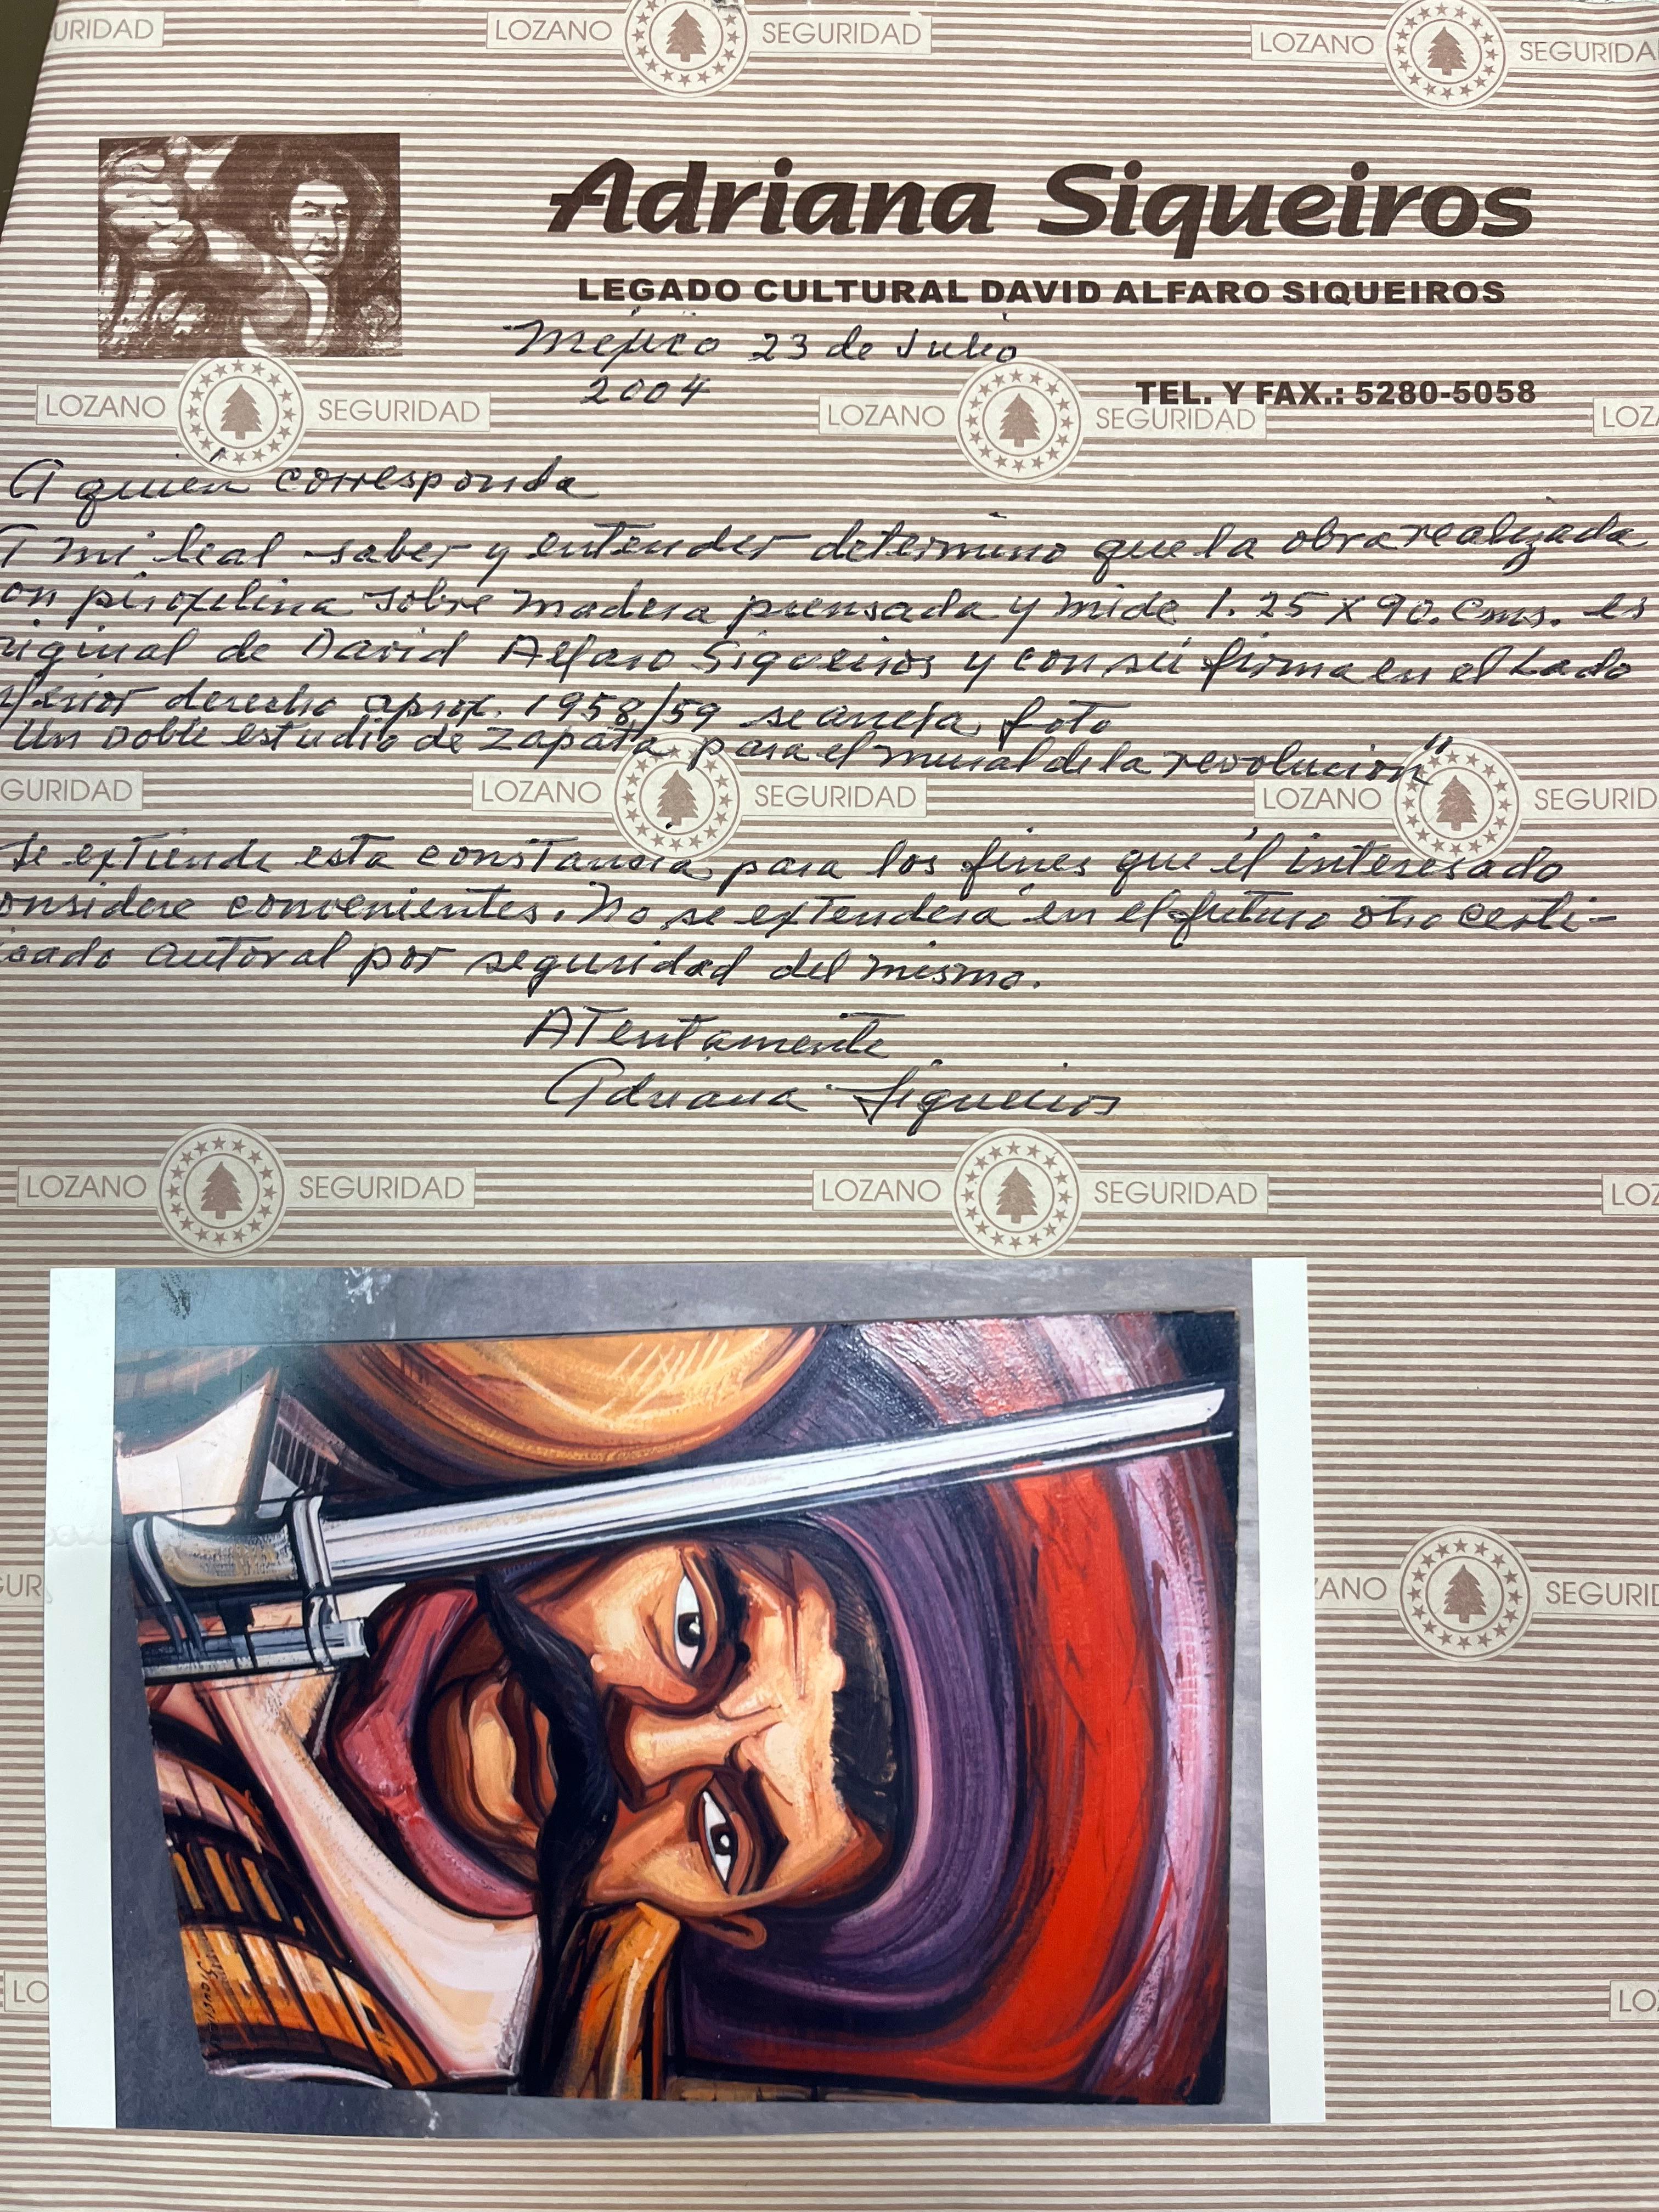 Emiliano Zapata, Original Social Realism Painting - Black Portrait Painting by David Alfaro Siqueiros